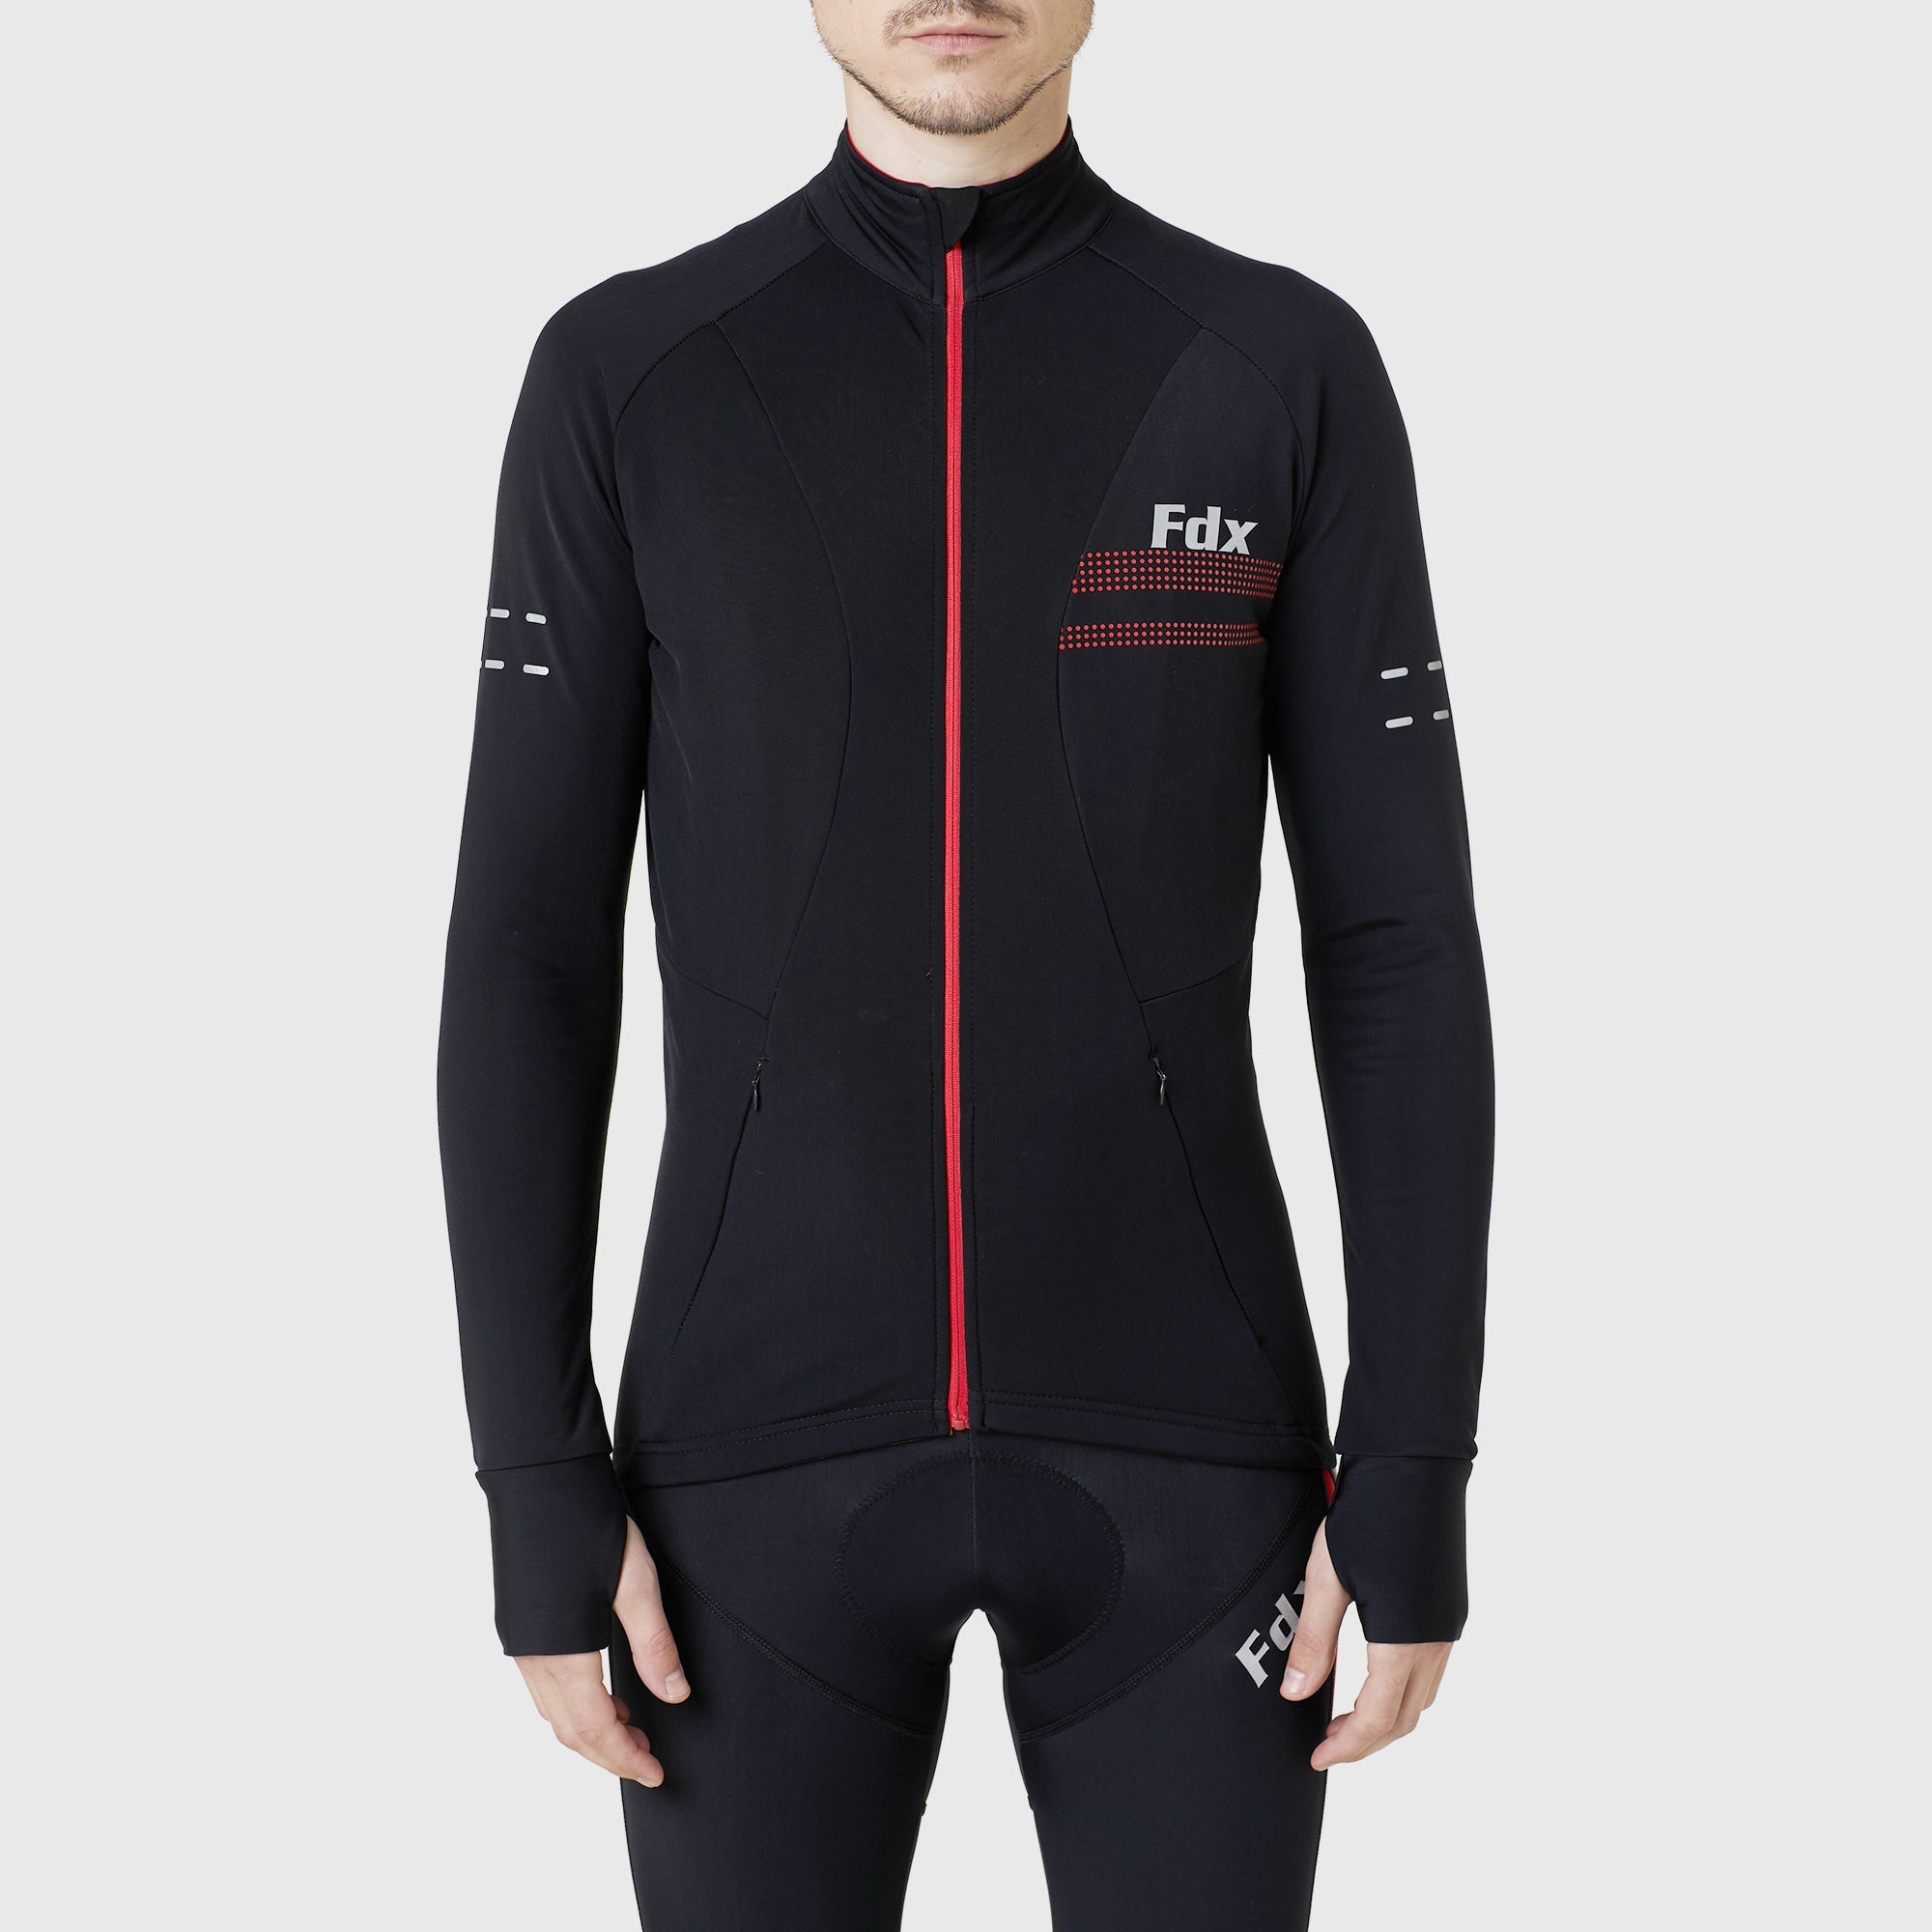 Fdx Warm Cycling Jersey for Men's Black & Red for Winter Roubaix Thermal Fleece Road Bike Wear Top Full Zipper, Pockets & Hi viz Reflectors - Arch